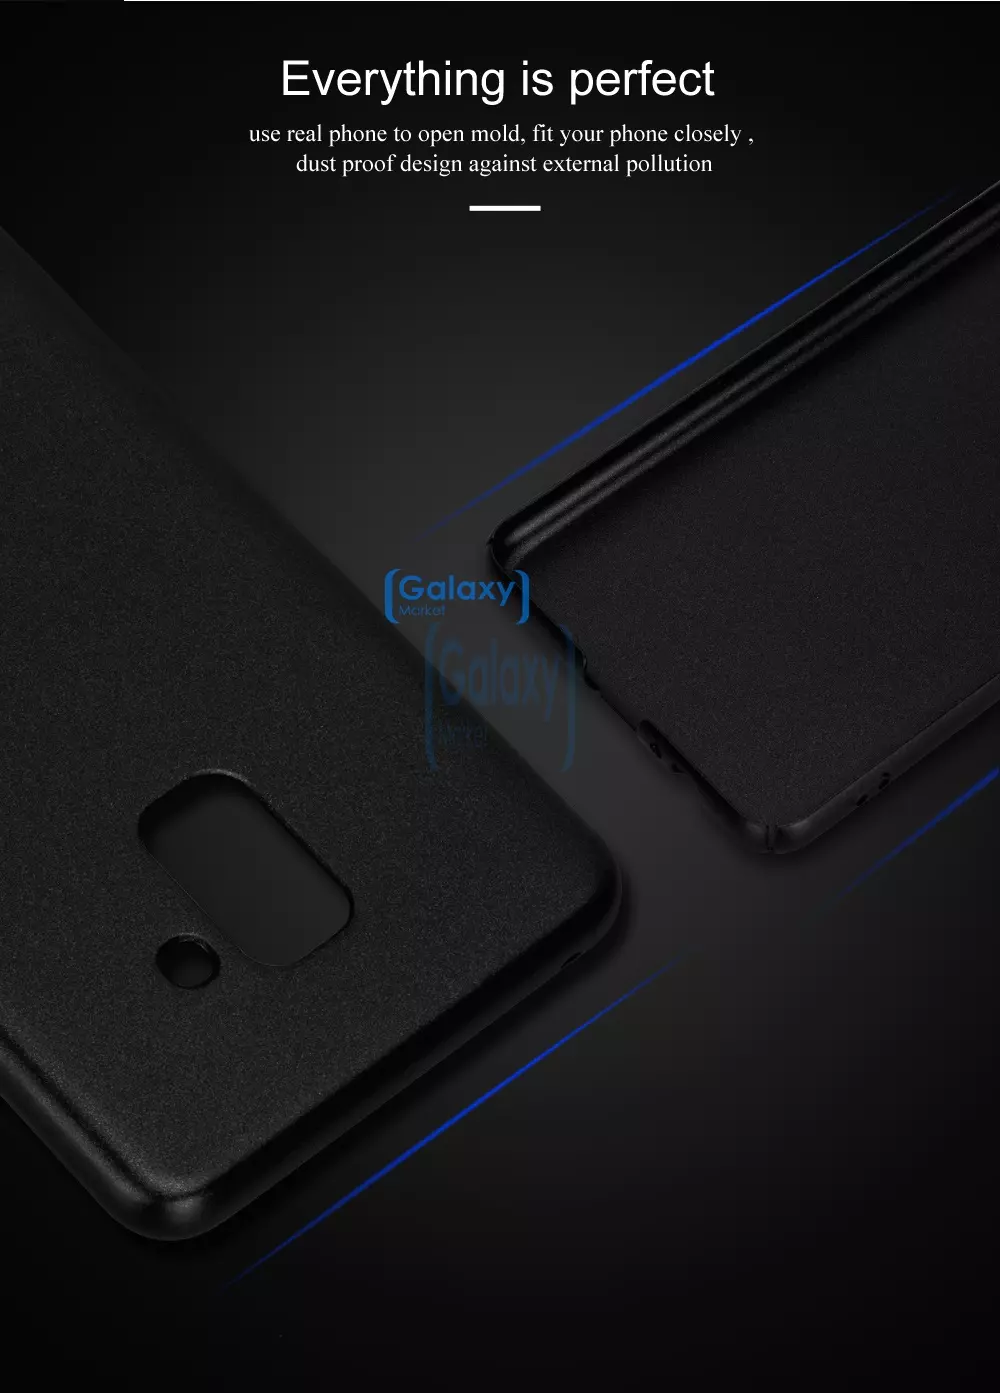 Чехол бампер Lenuo Matte Case для Samsung Galaxy A8 Plus 2018 Blue (Синий)